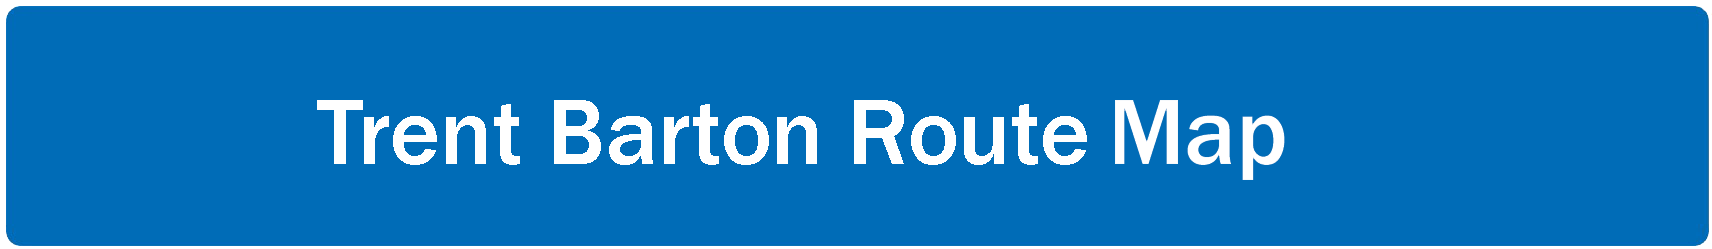 Trent Barton Route Map